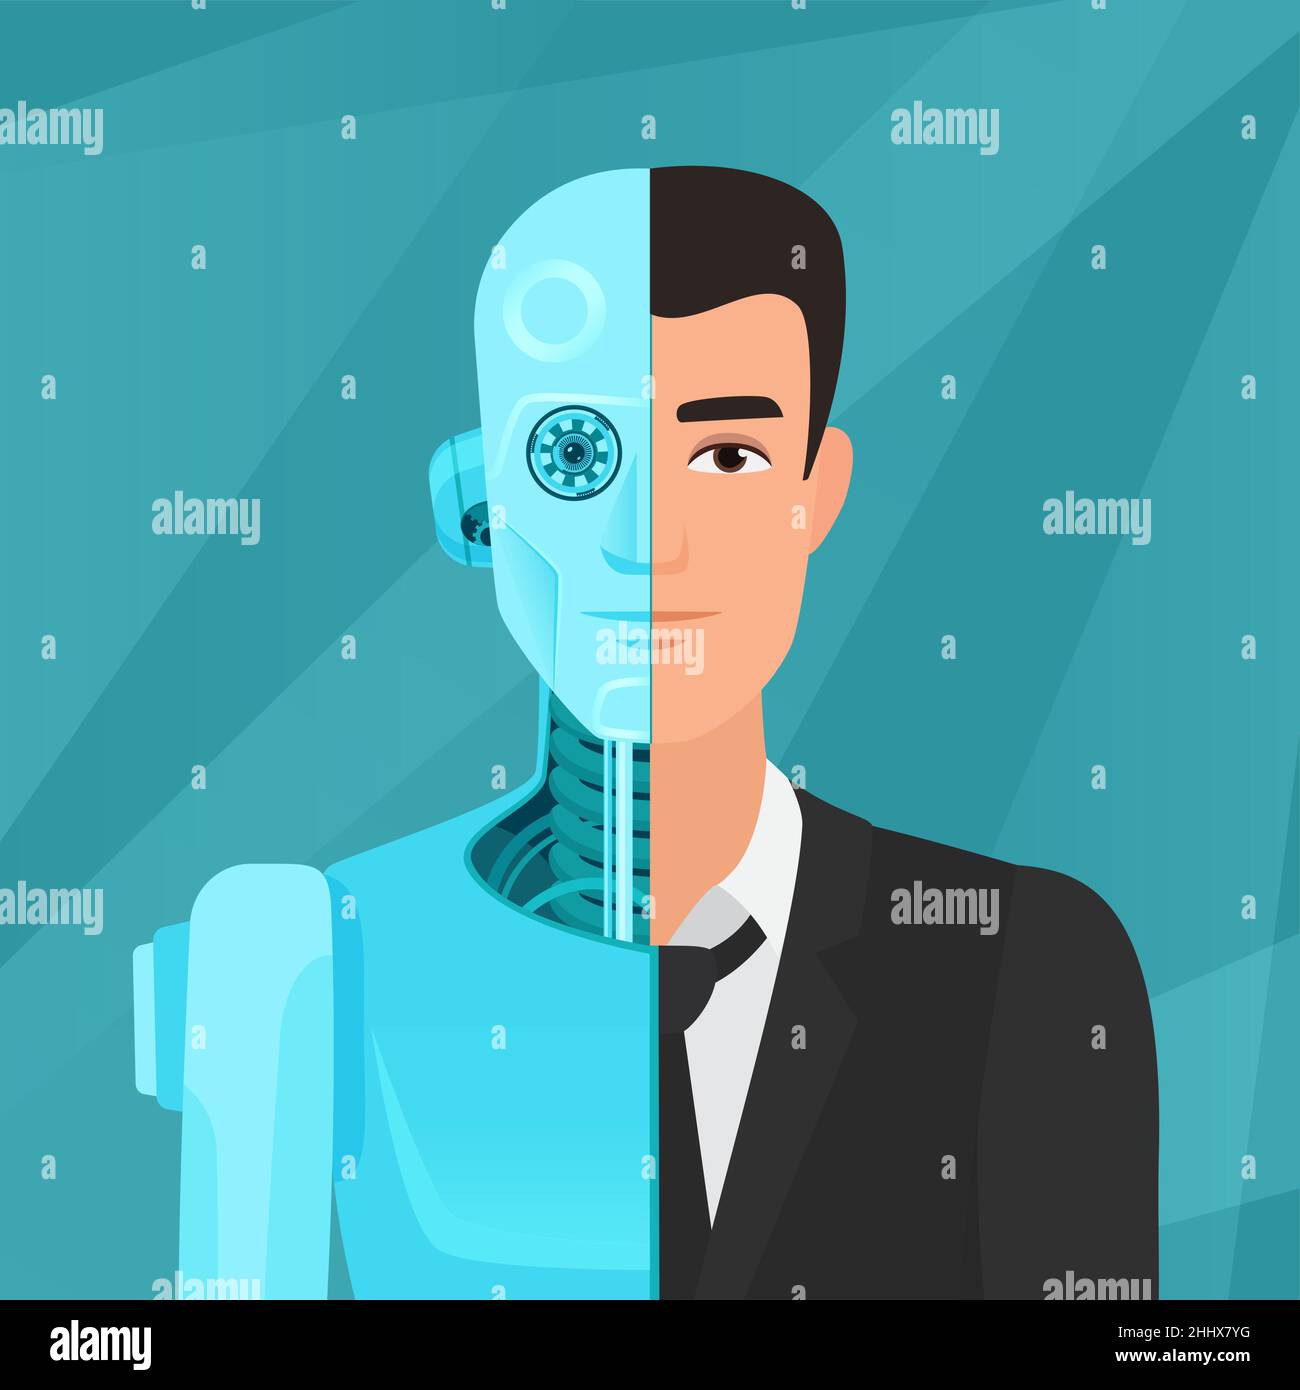 Half cyborg, half human man businessman in suit vector illustration Stock Vector